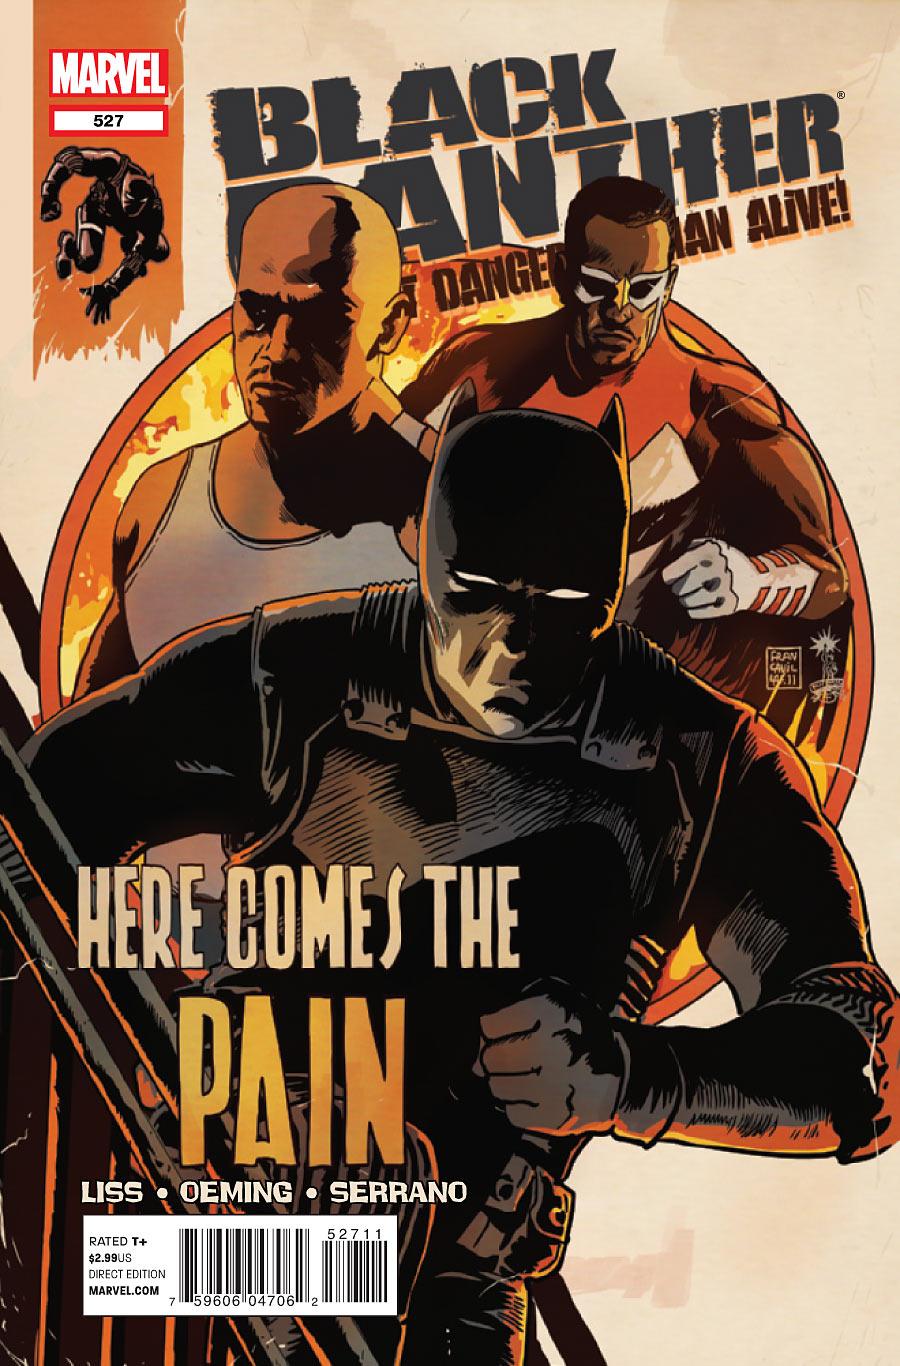 Black Panther: The Most Dangerous Man Alive Vol. 1 #527